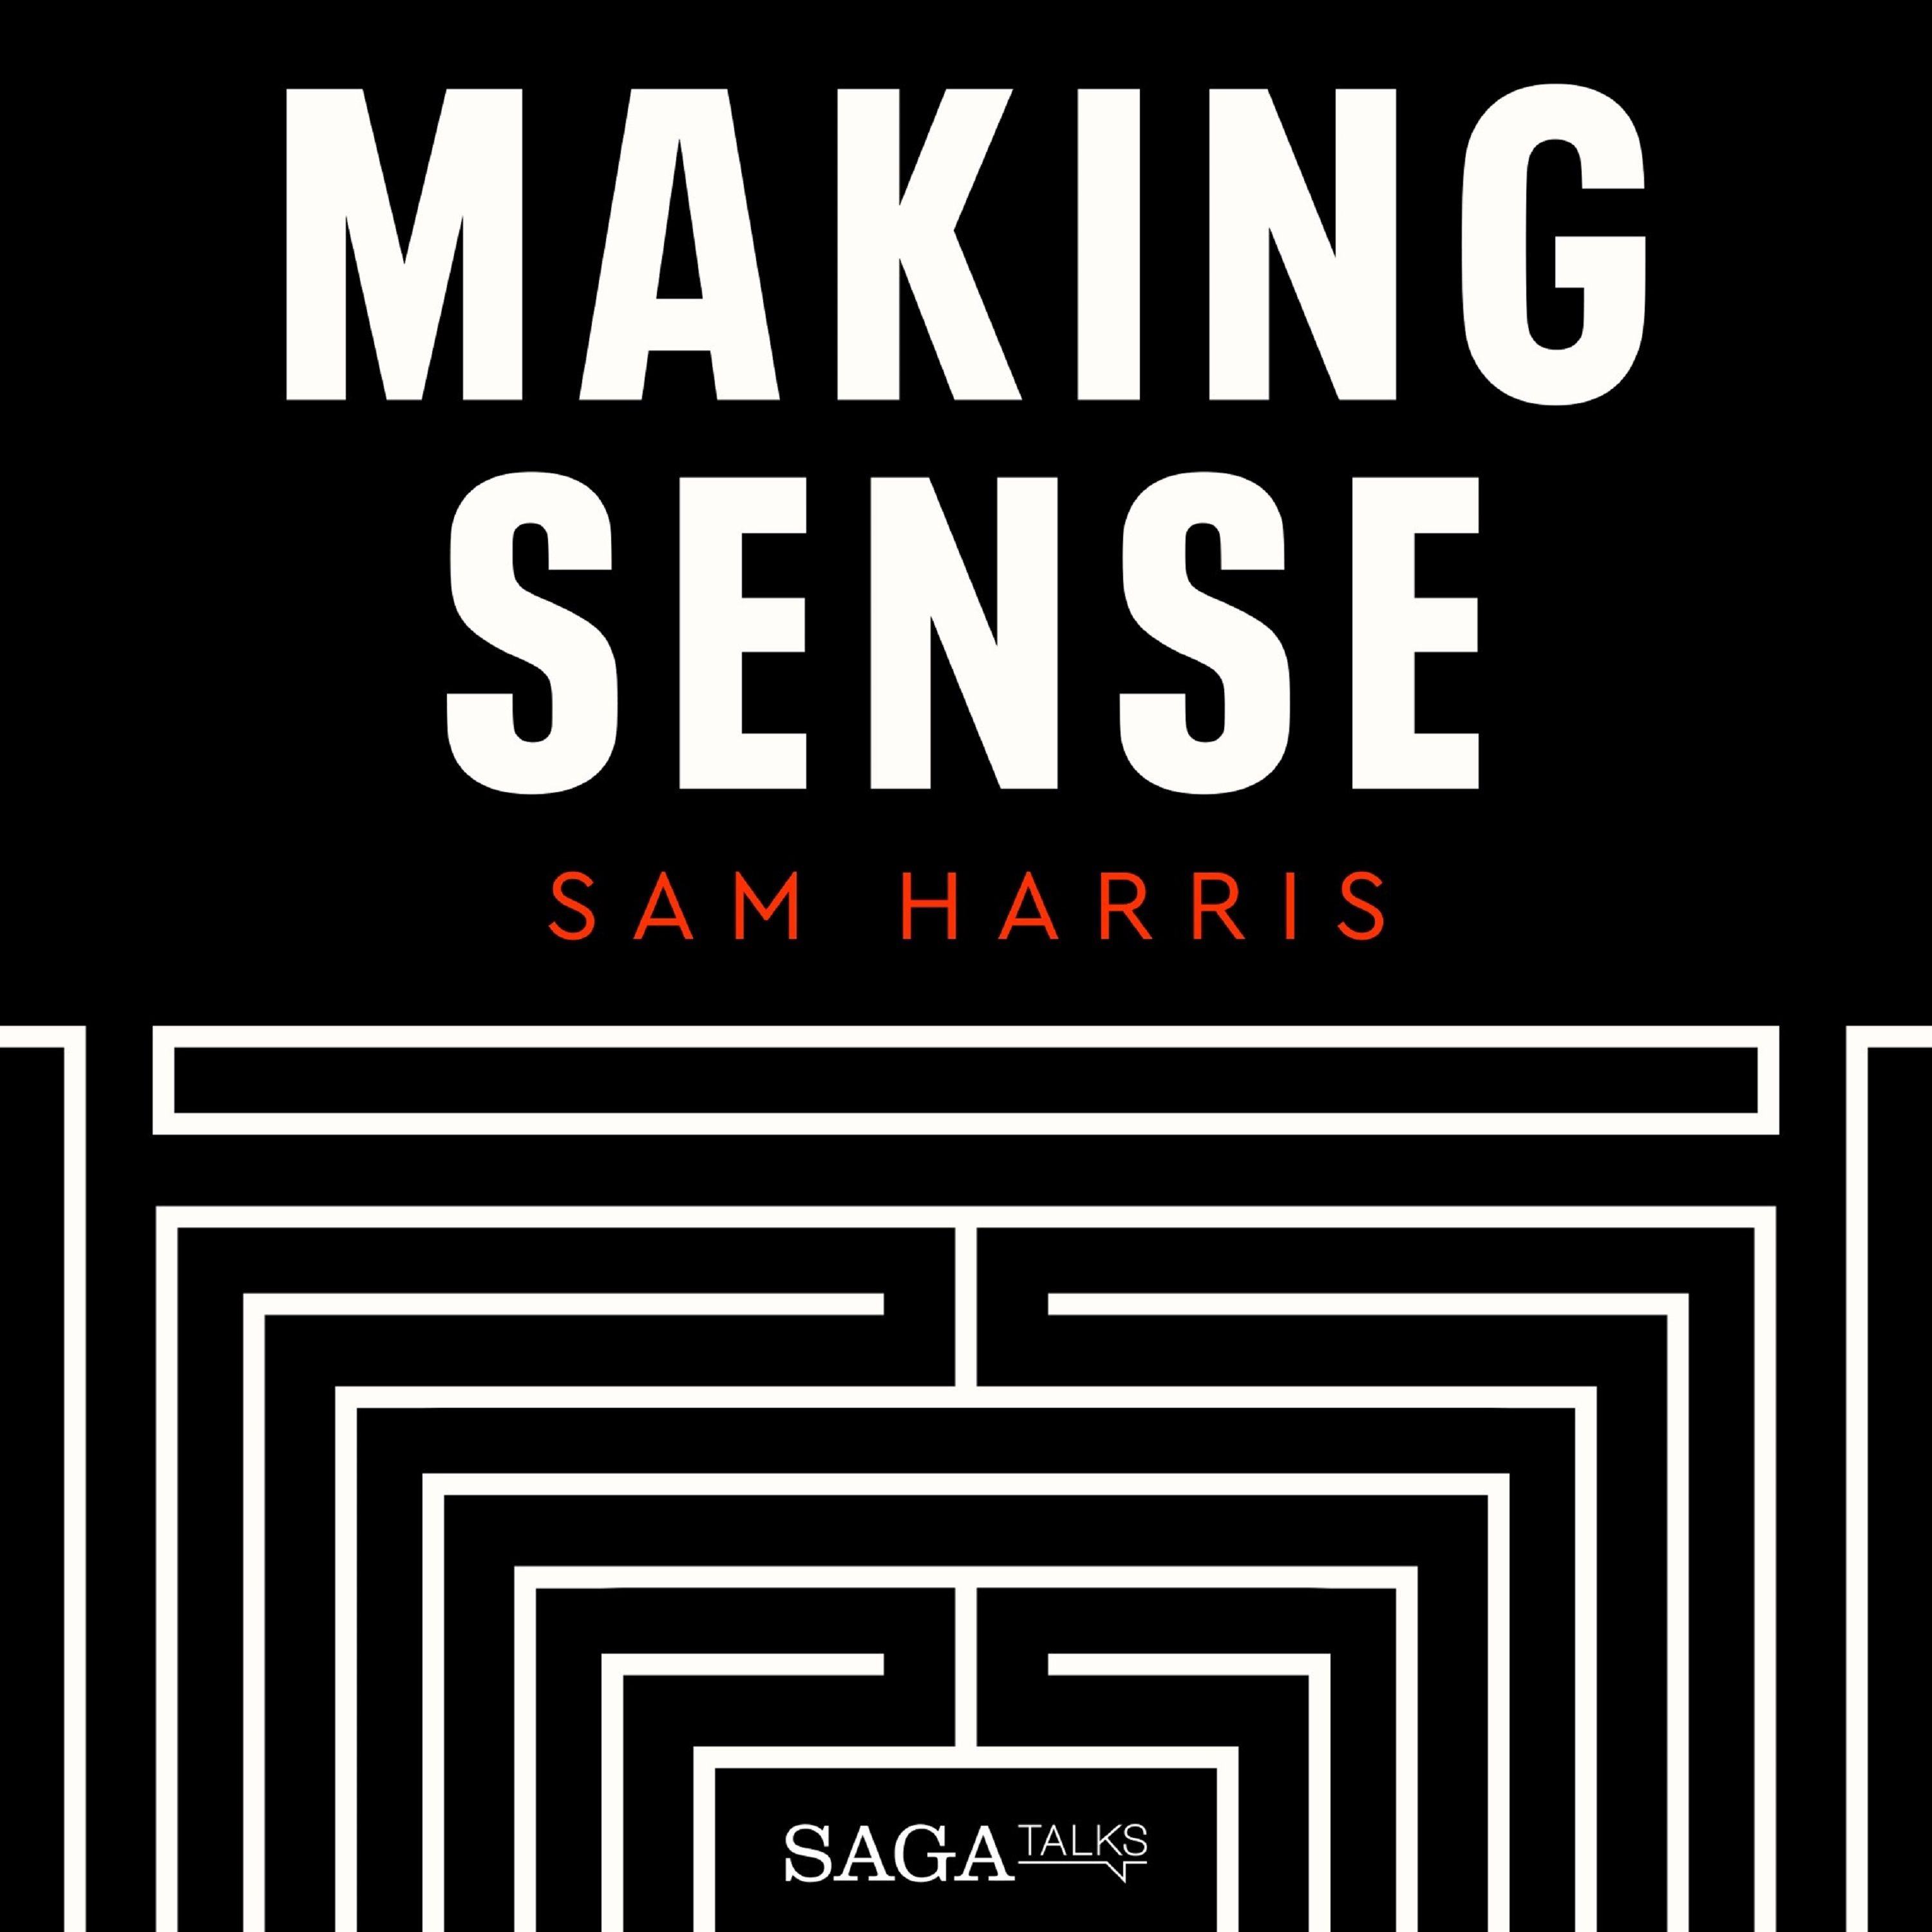 Richard Dawkins, Sam Harris, and Matt Dillahunty, lydbog af Sam Harris